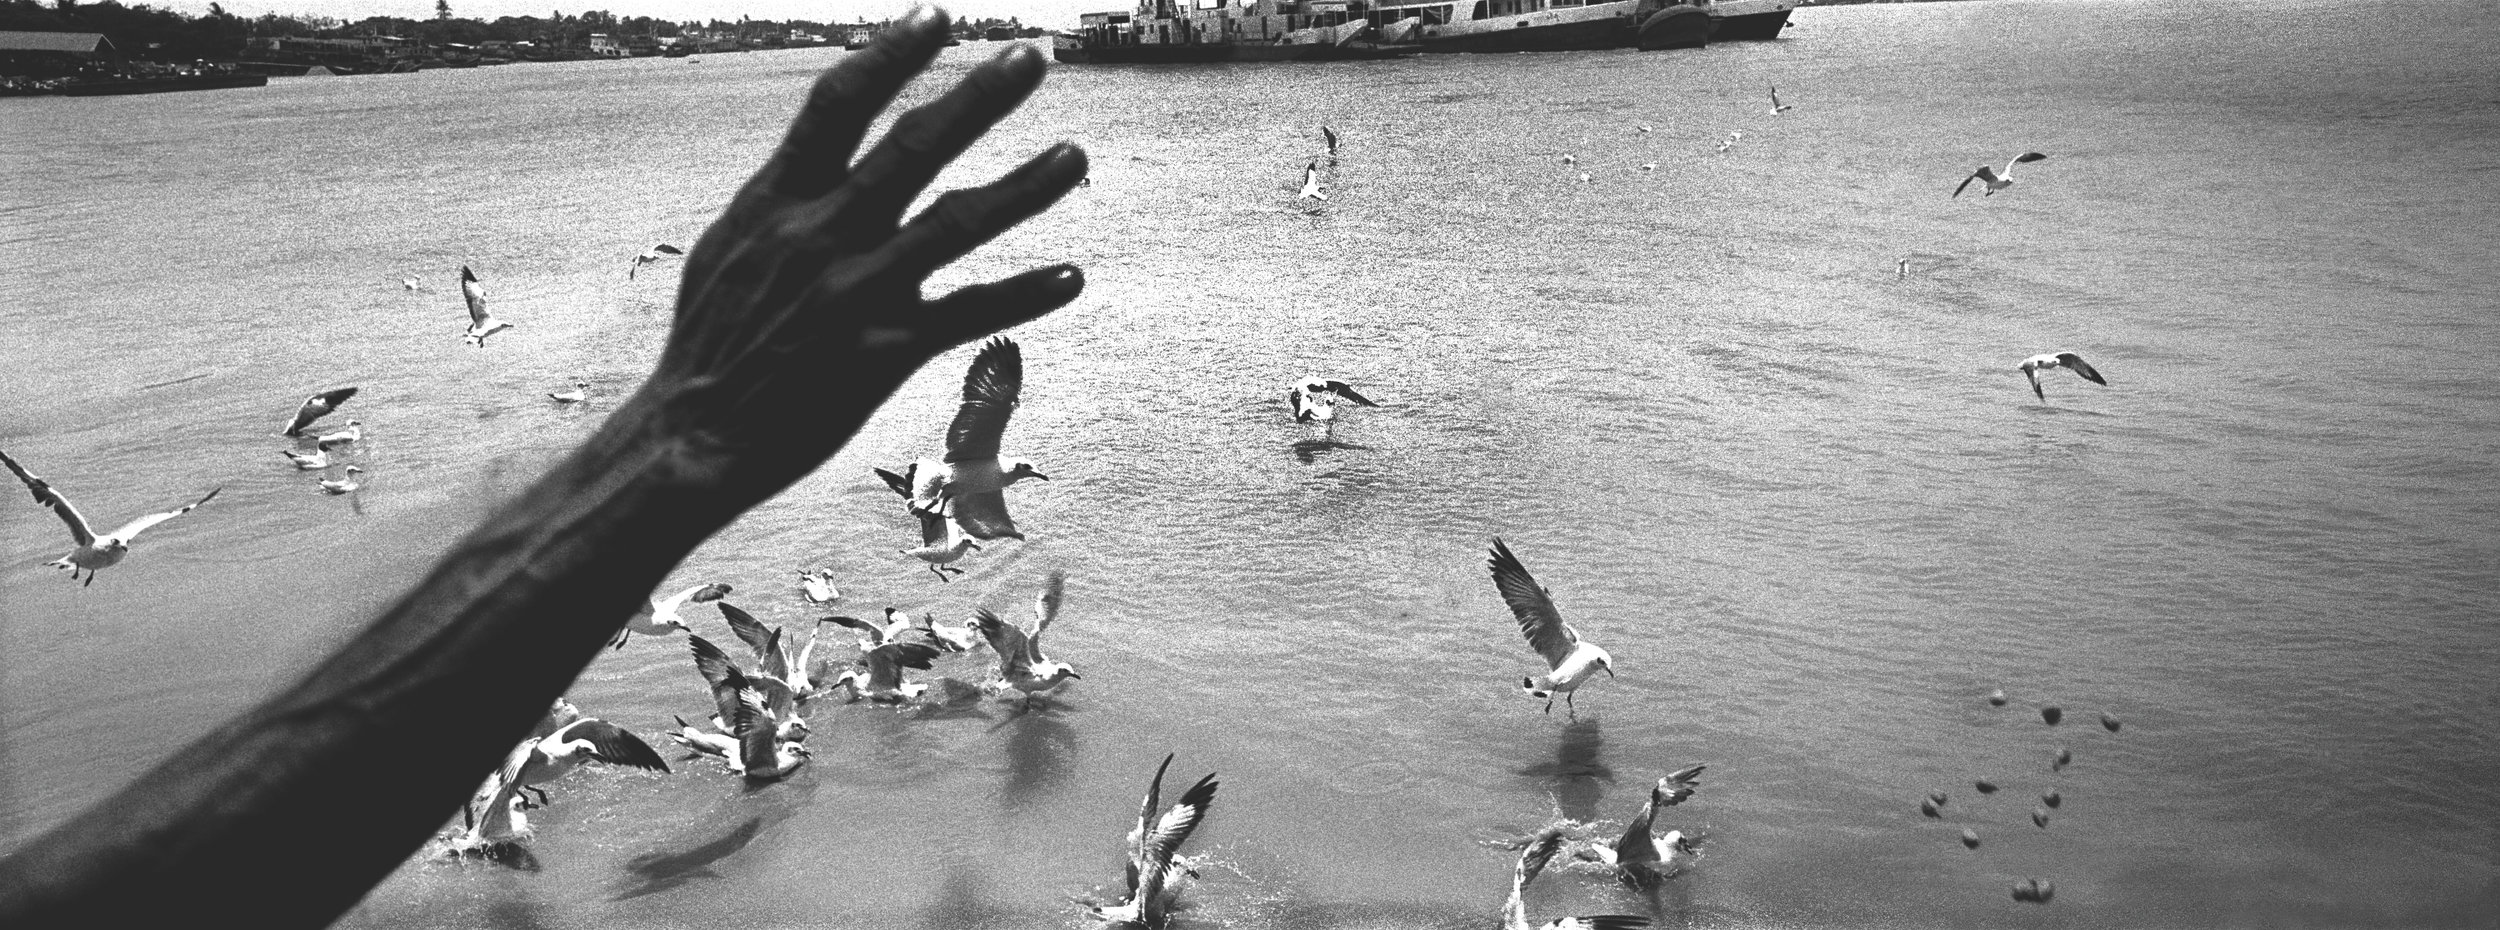  Feeding the gulls while riding the cross-river ferry. Rangoon, Burma. 2014 